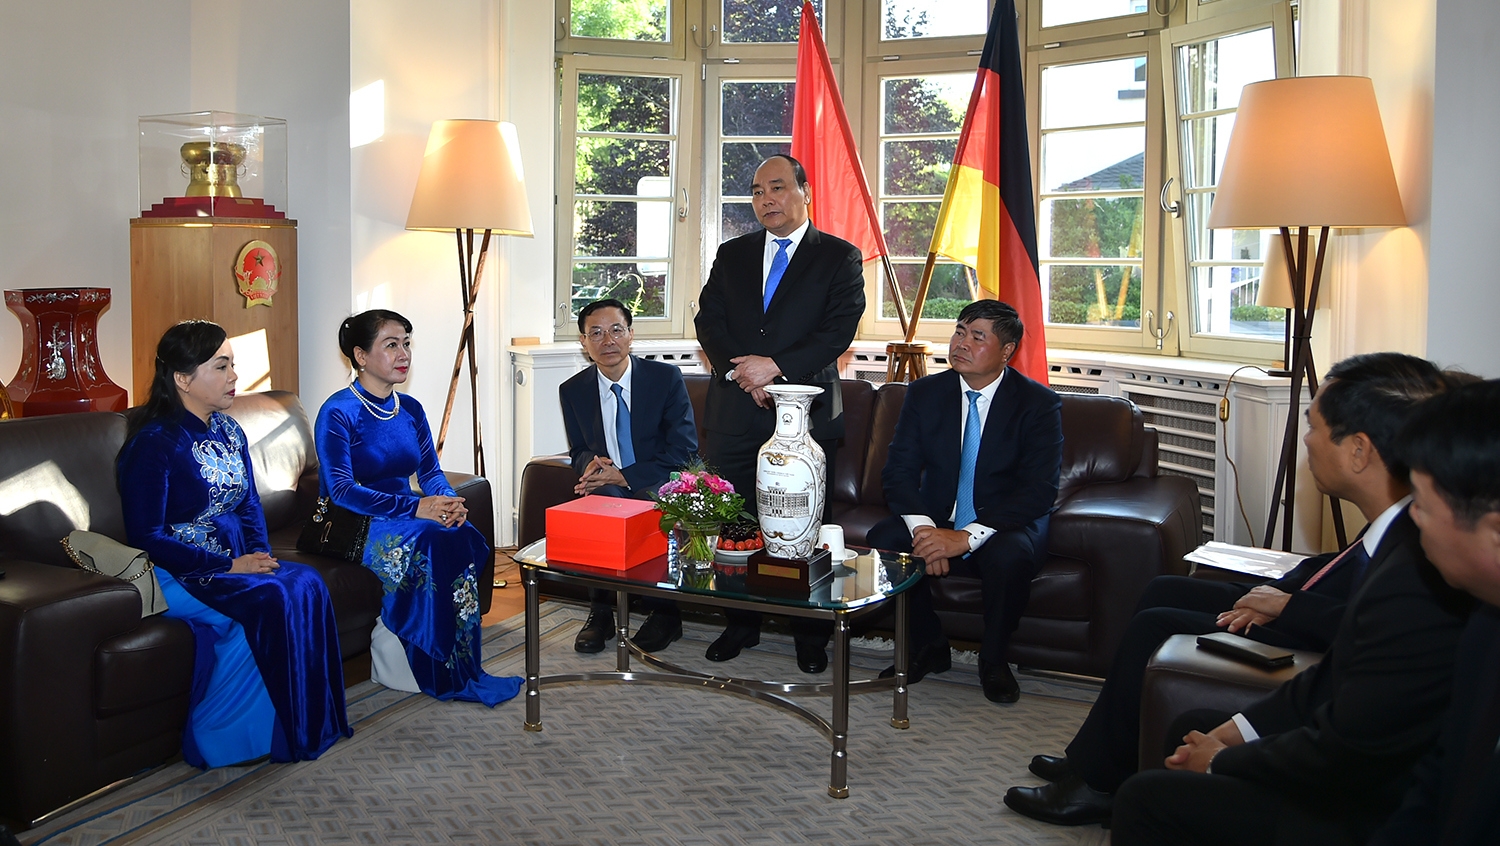 PM Phuc visits Consulate General’s staff in Frankfurt